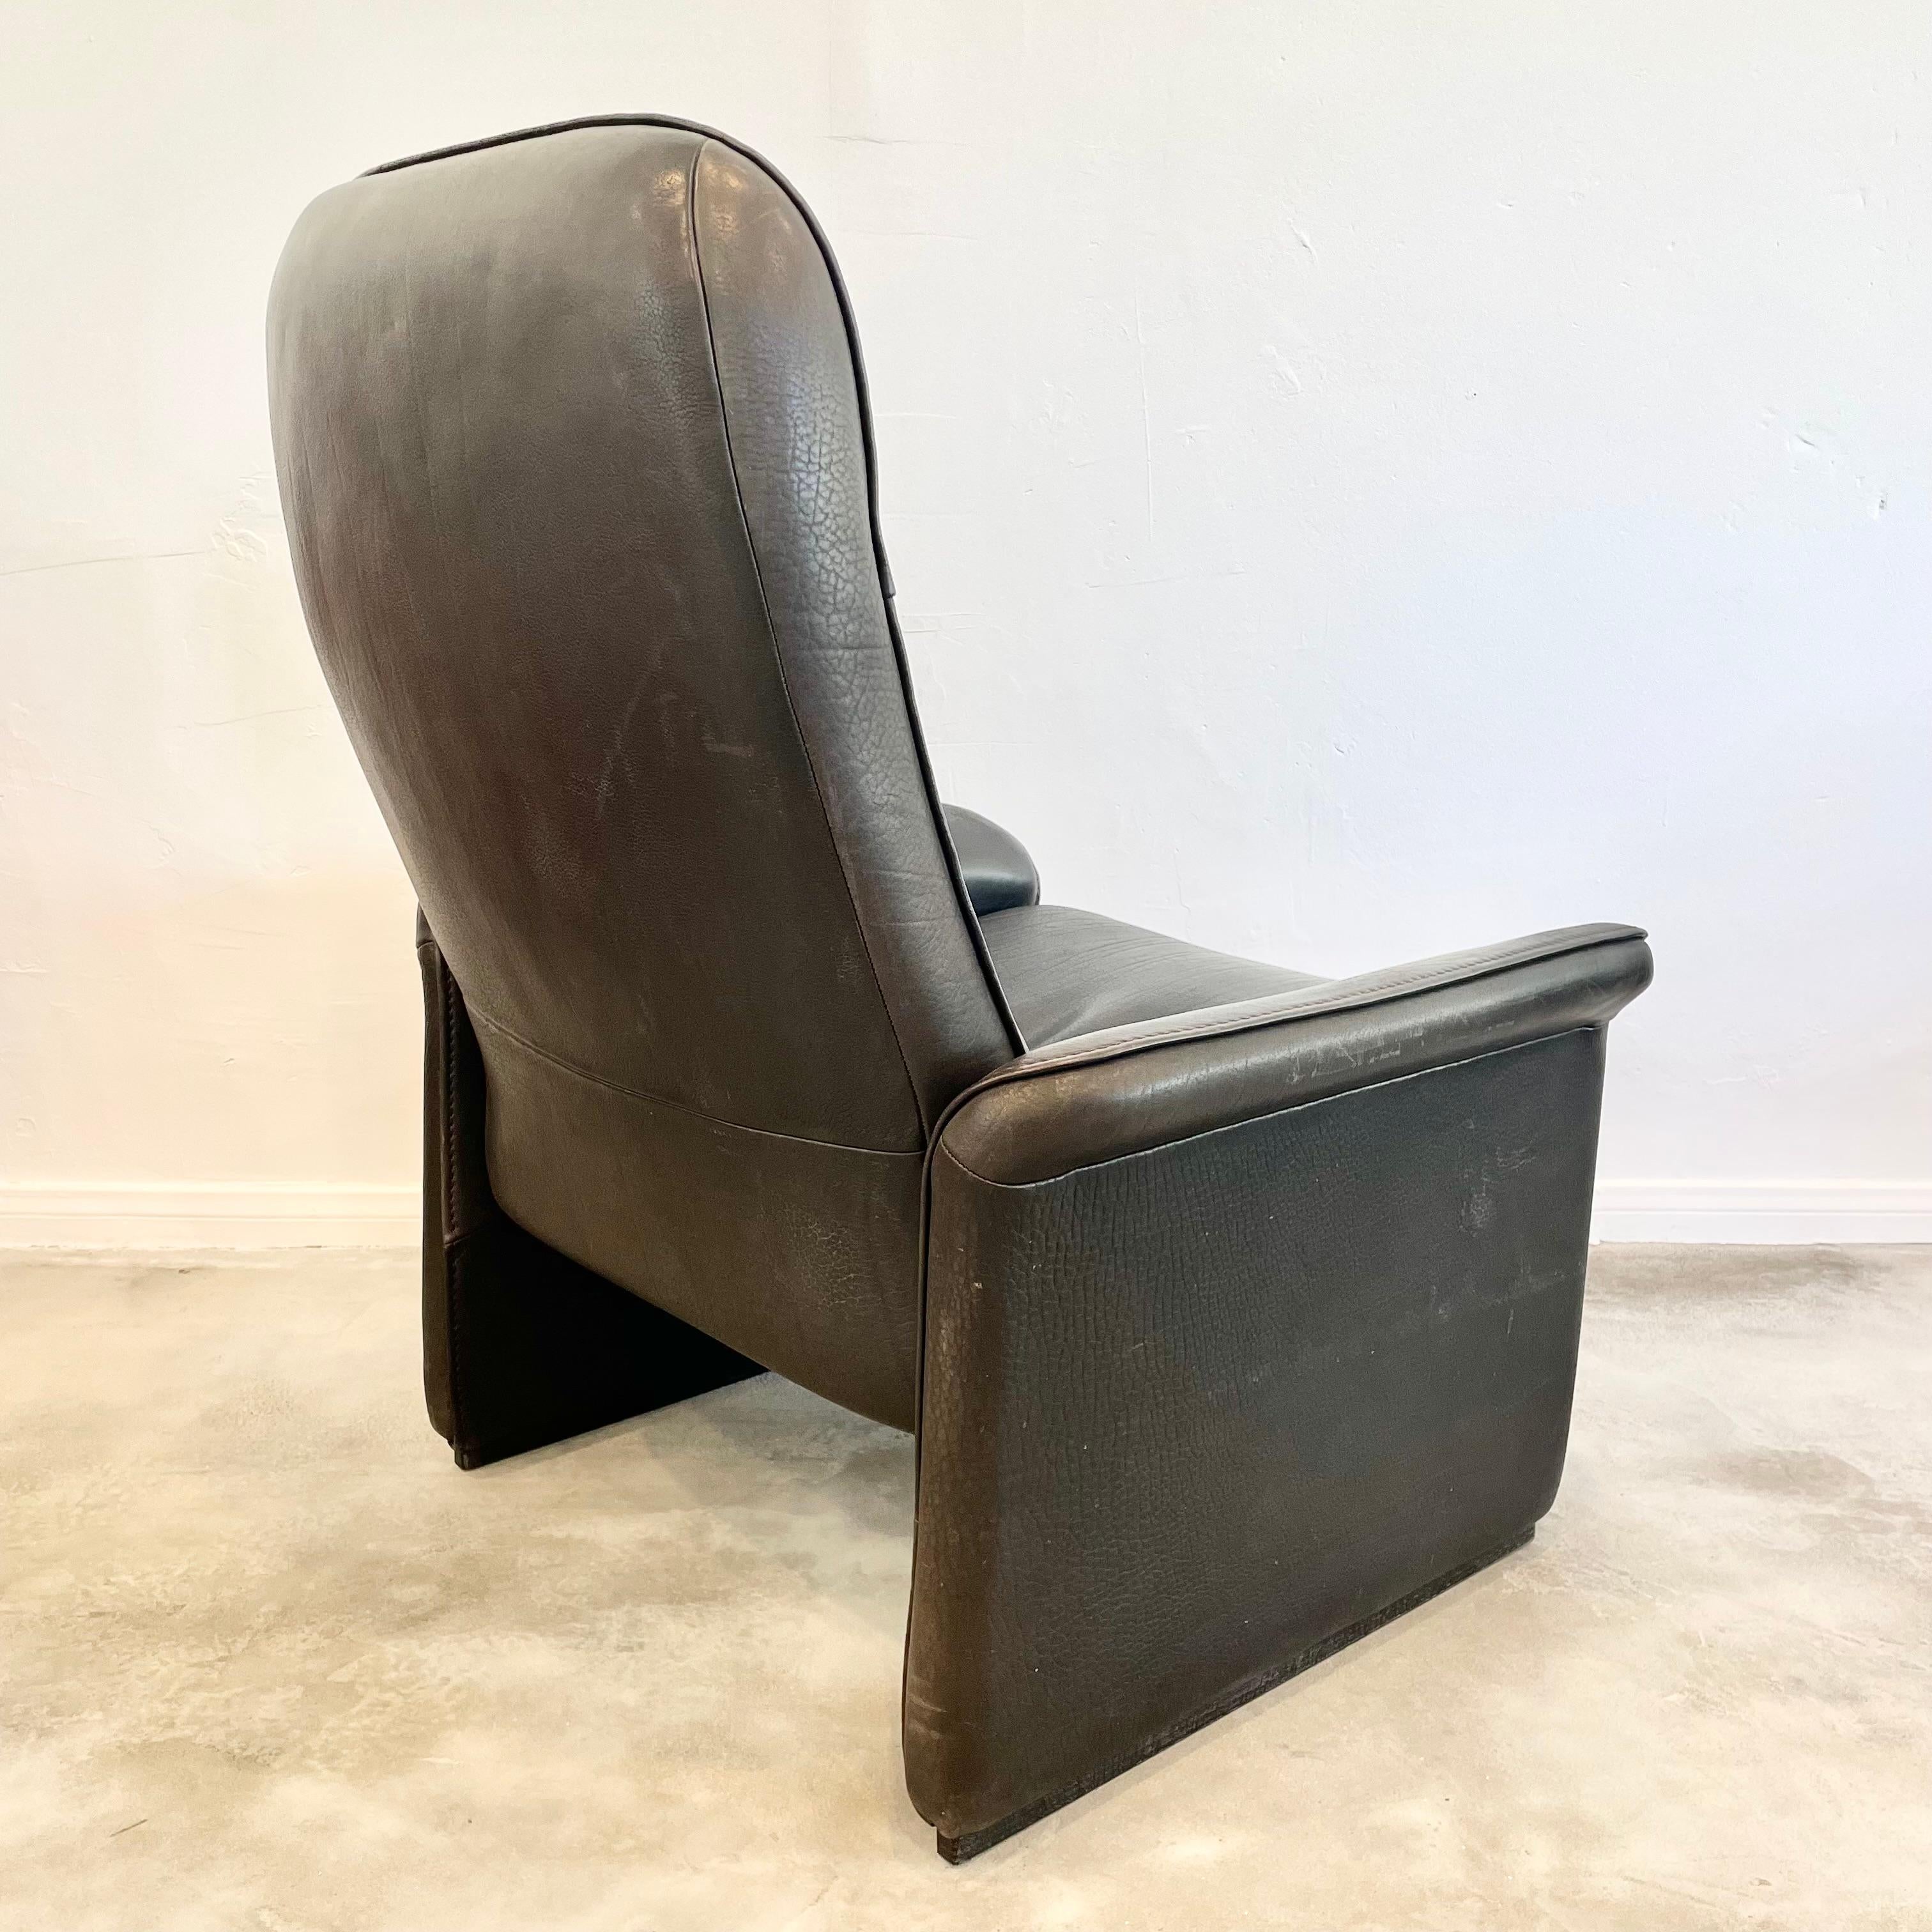 Swiss De Sede DS-50 Black Leather Recliner Chair, 1970s Switzerland For Sale